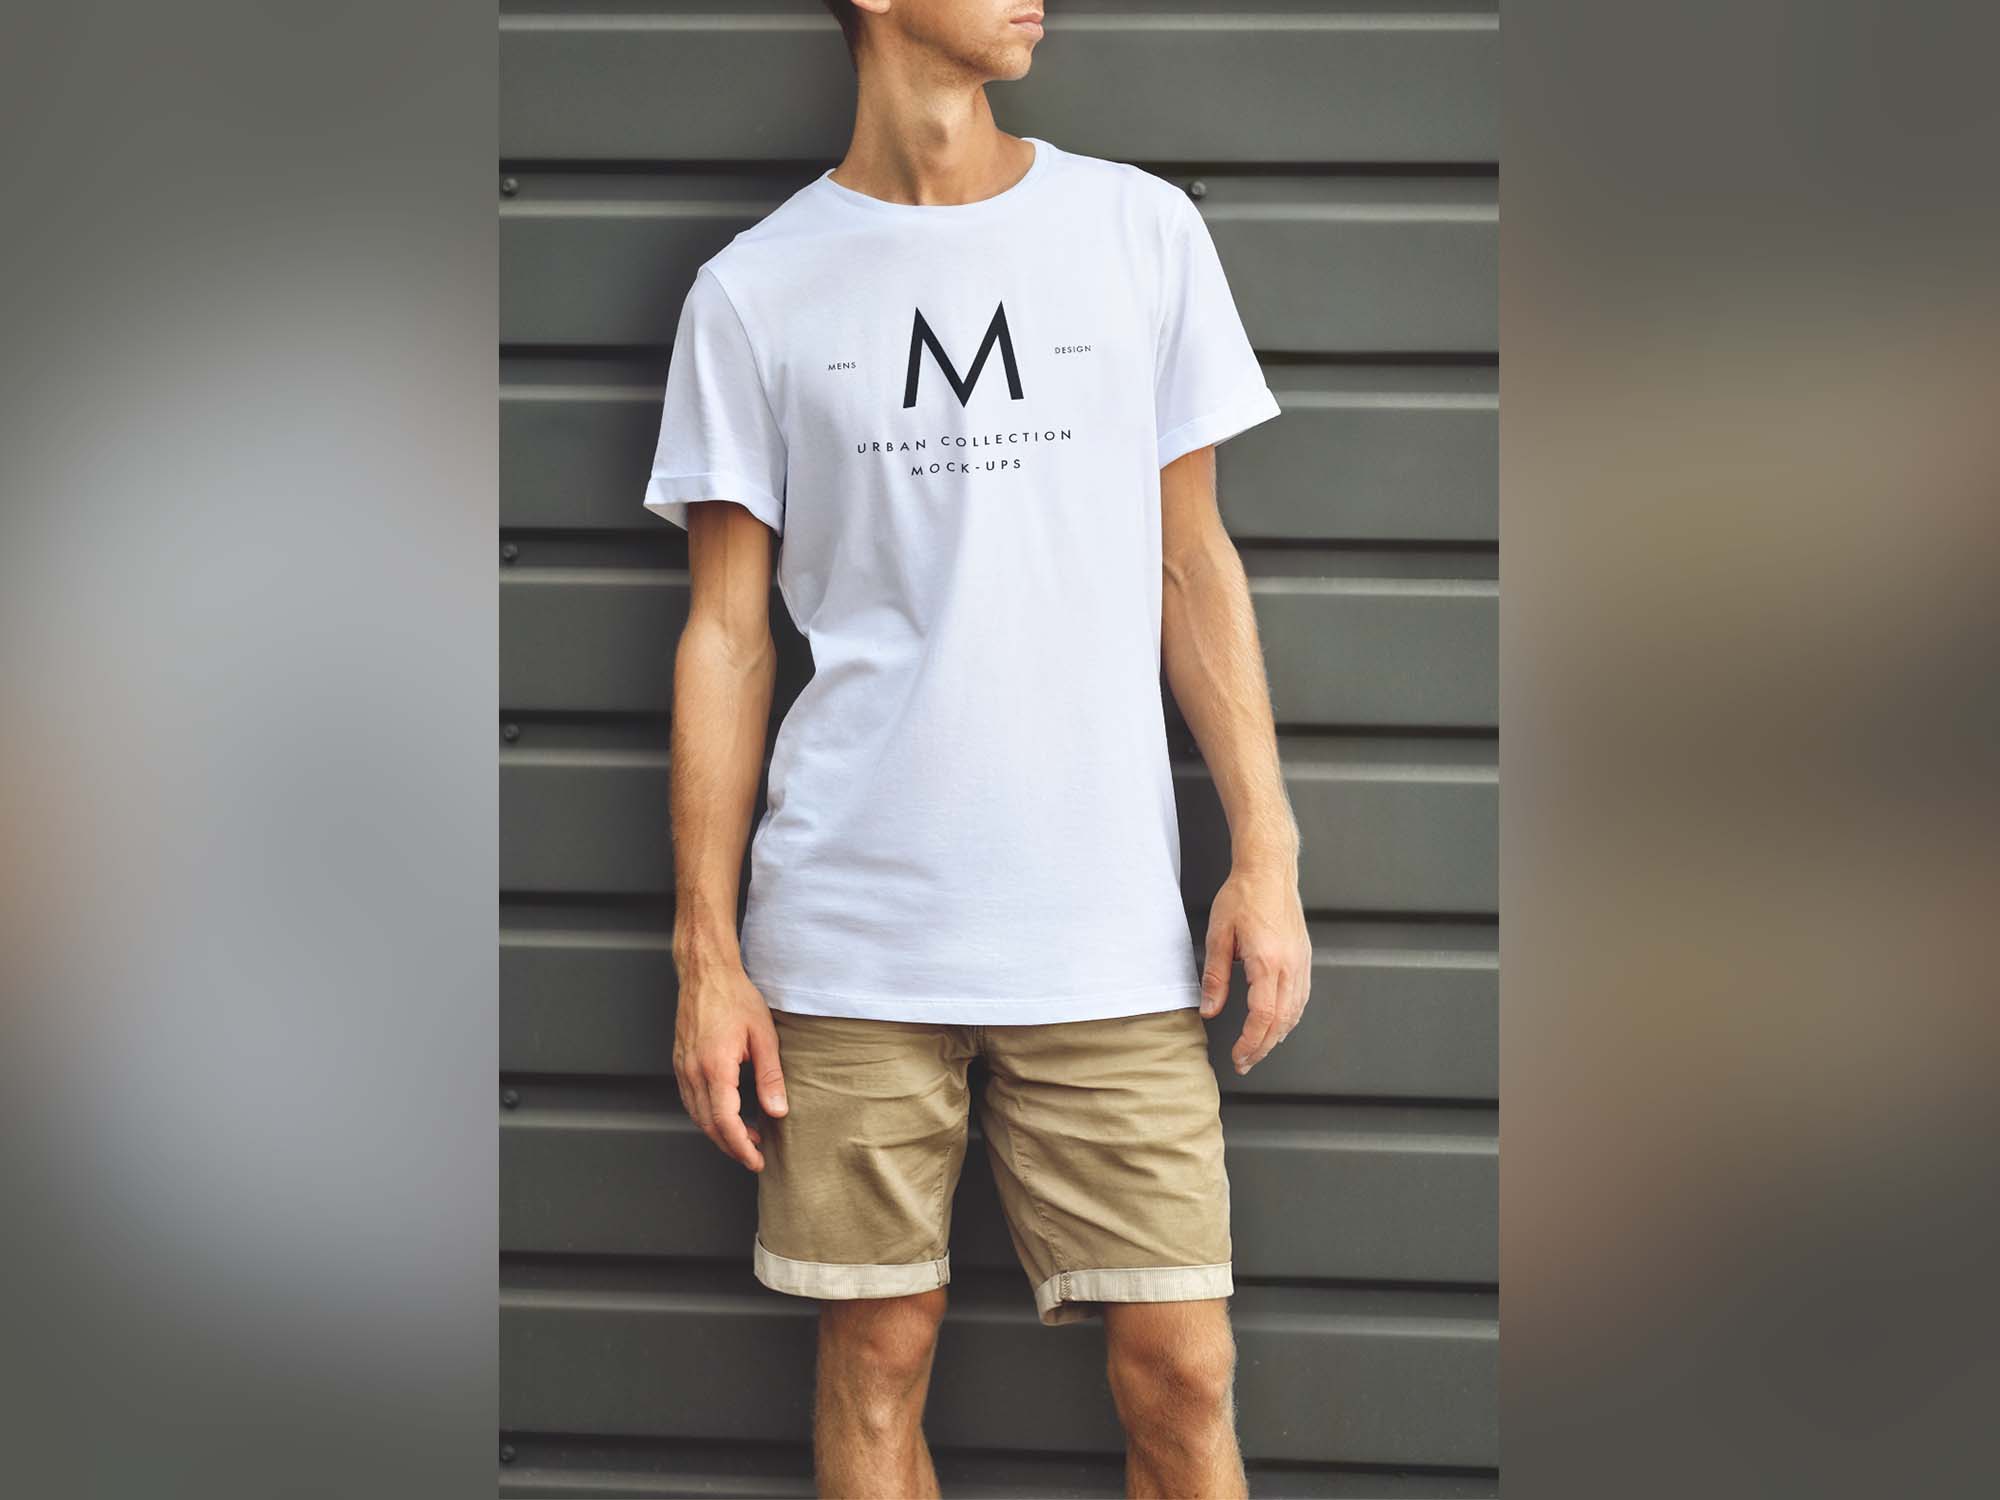 Urban T-Shirt Mockup